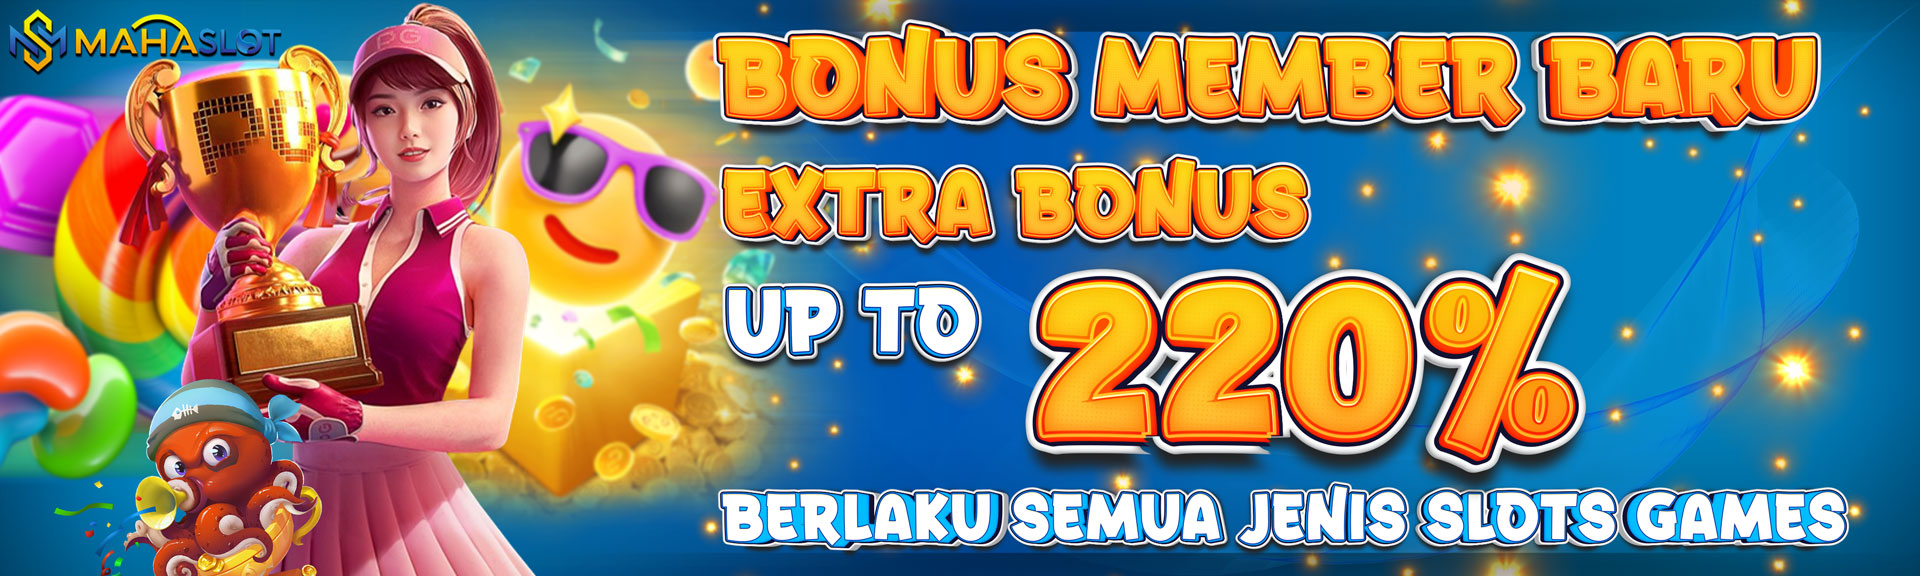 Extra Bonus Slot 220%